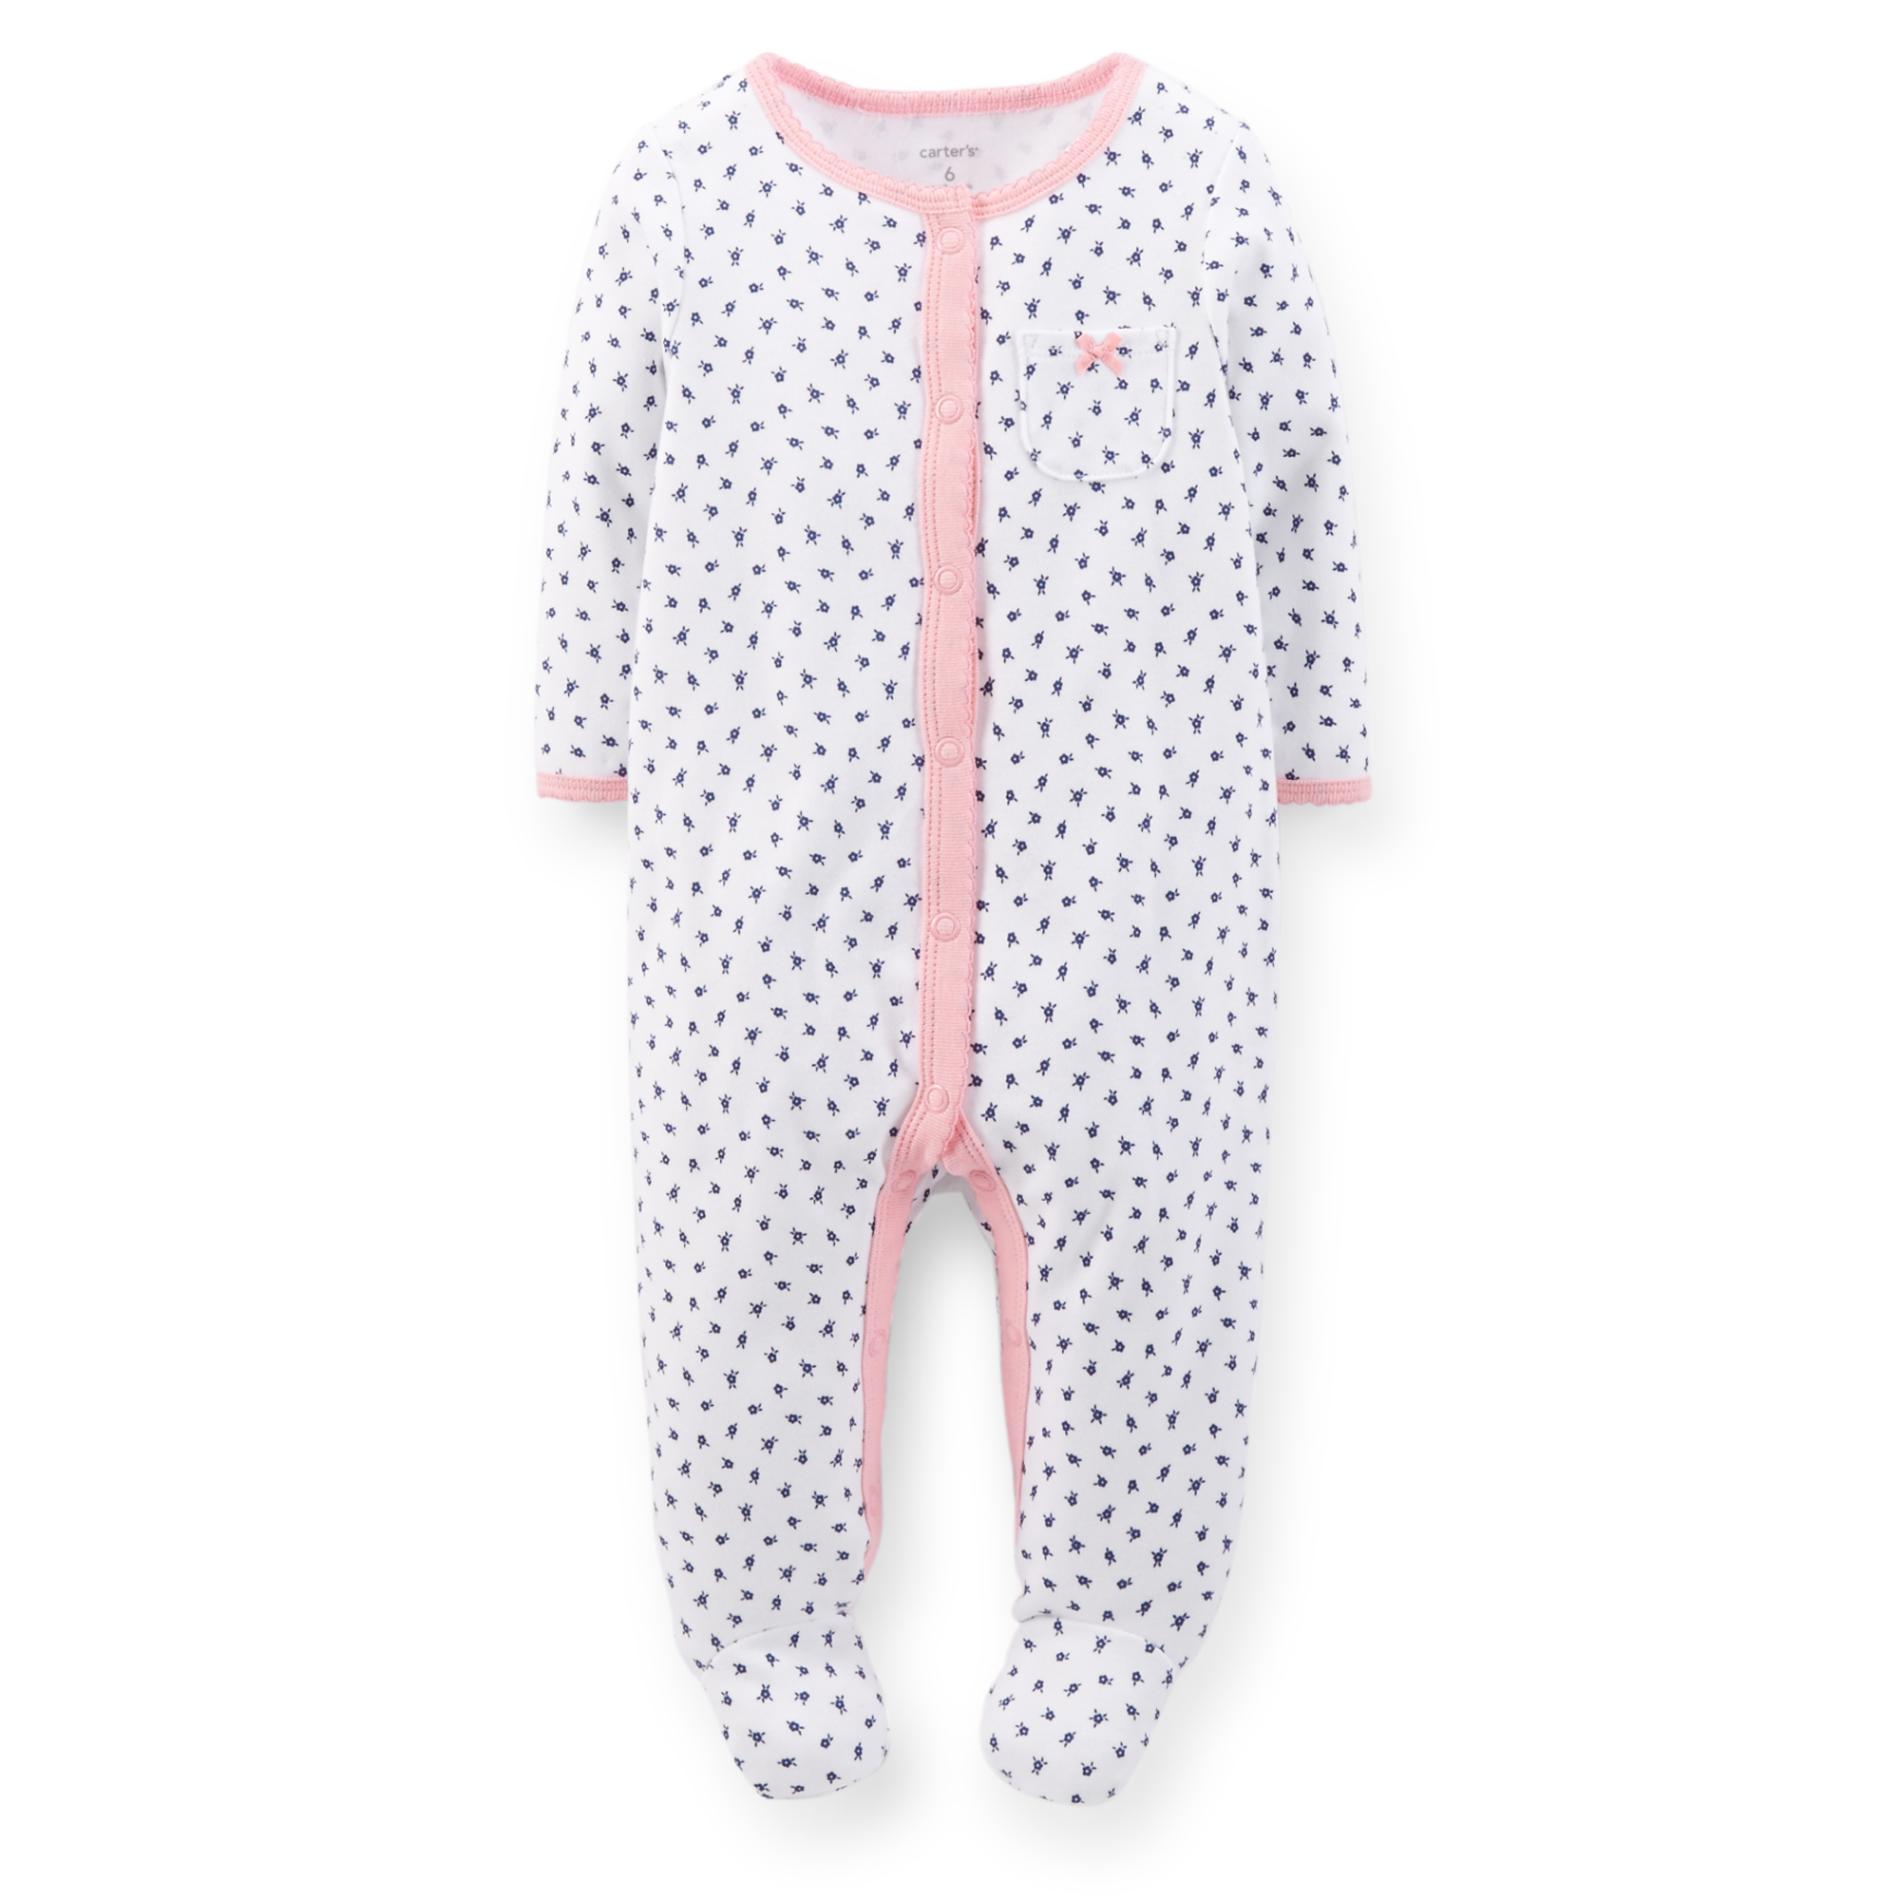 Carter's Newborn Girl's Snap-Front Sleeper Pajamas - Floral